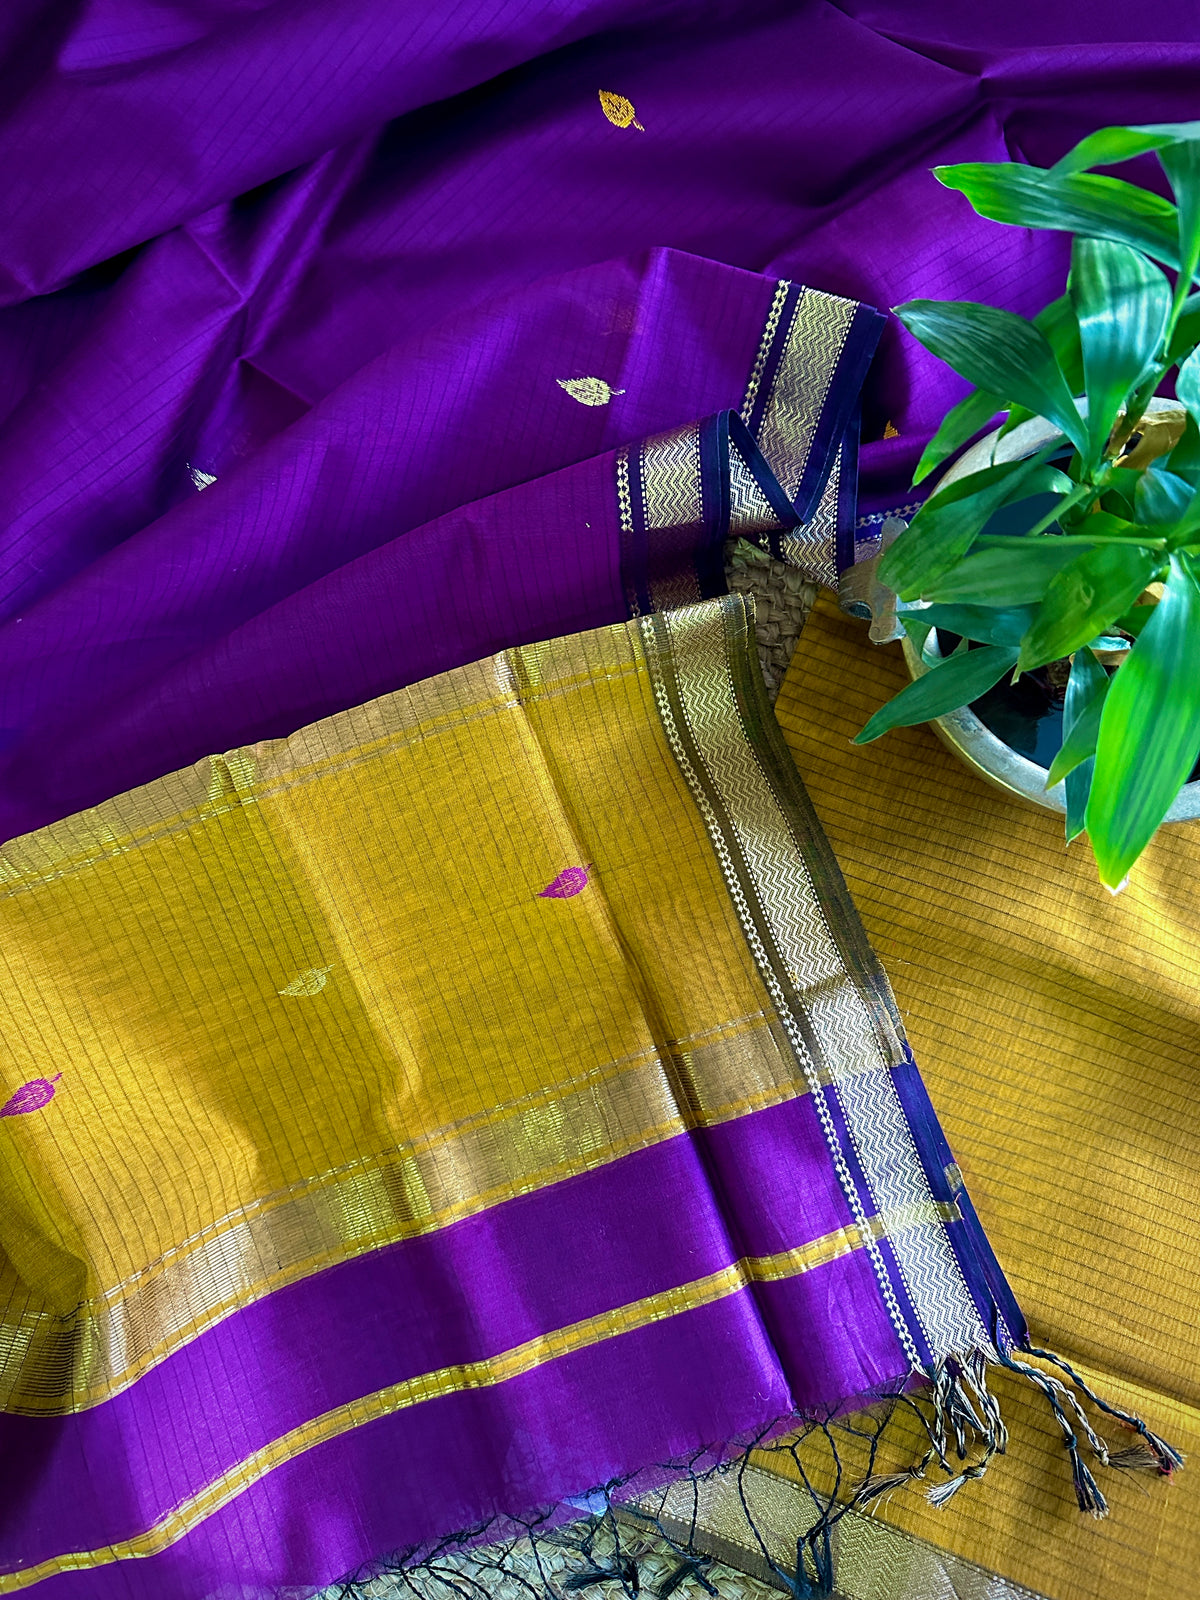 Maheshwari Mustard & Purple Motifs Top Dupatta Sets